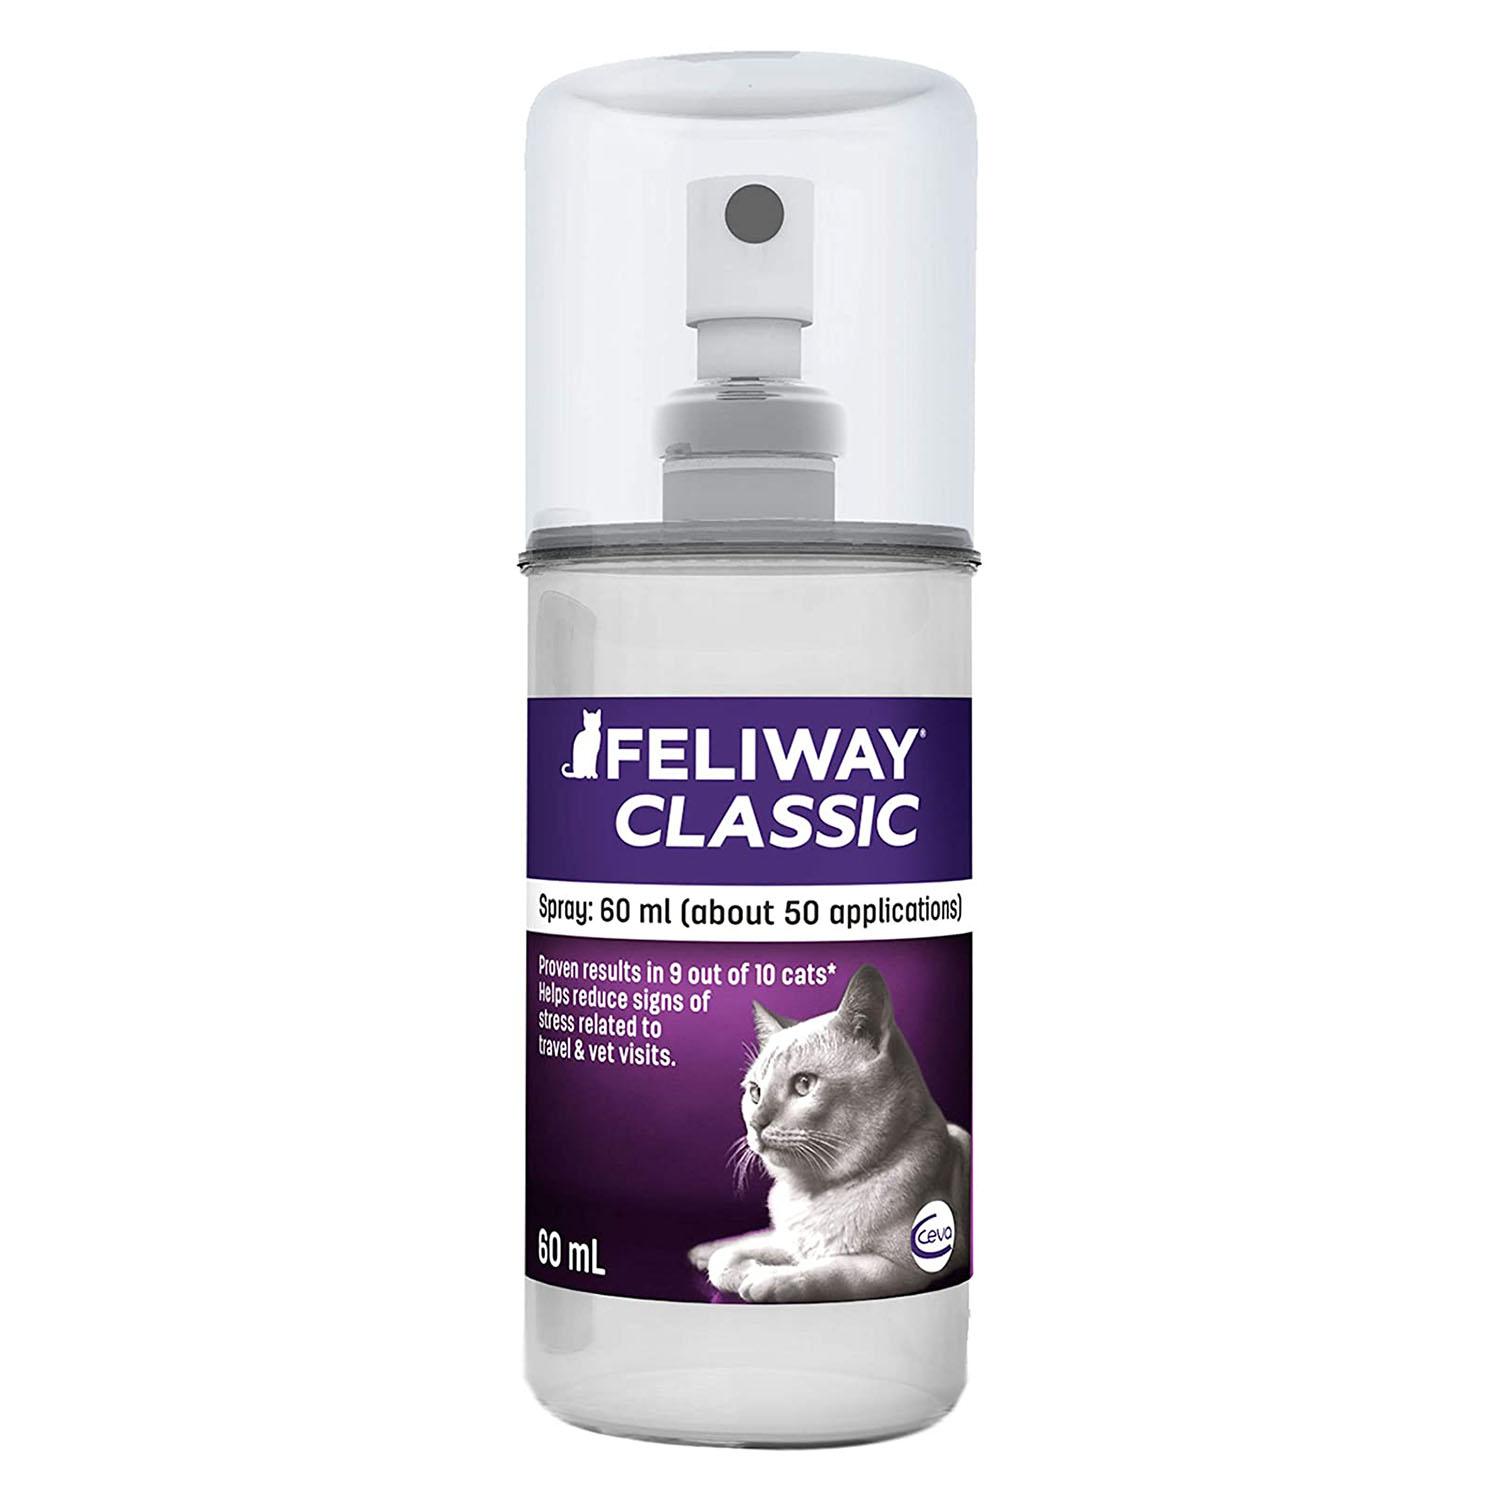 Feliway Classic Calming Spray for Cats - 60 ml